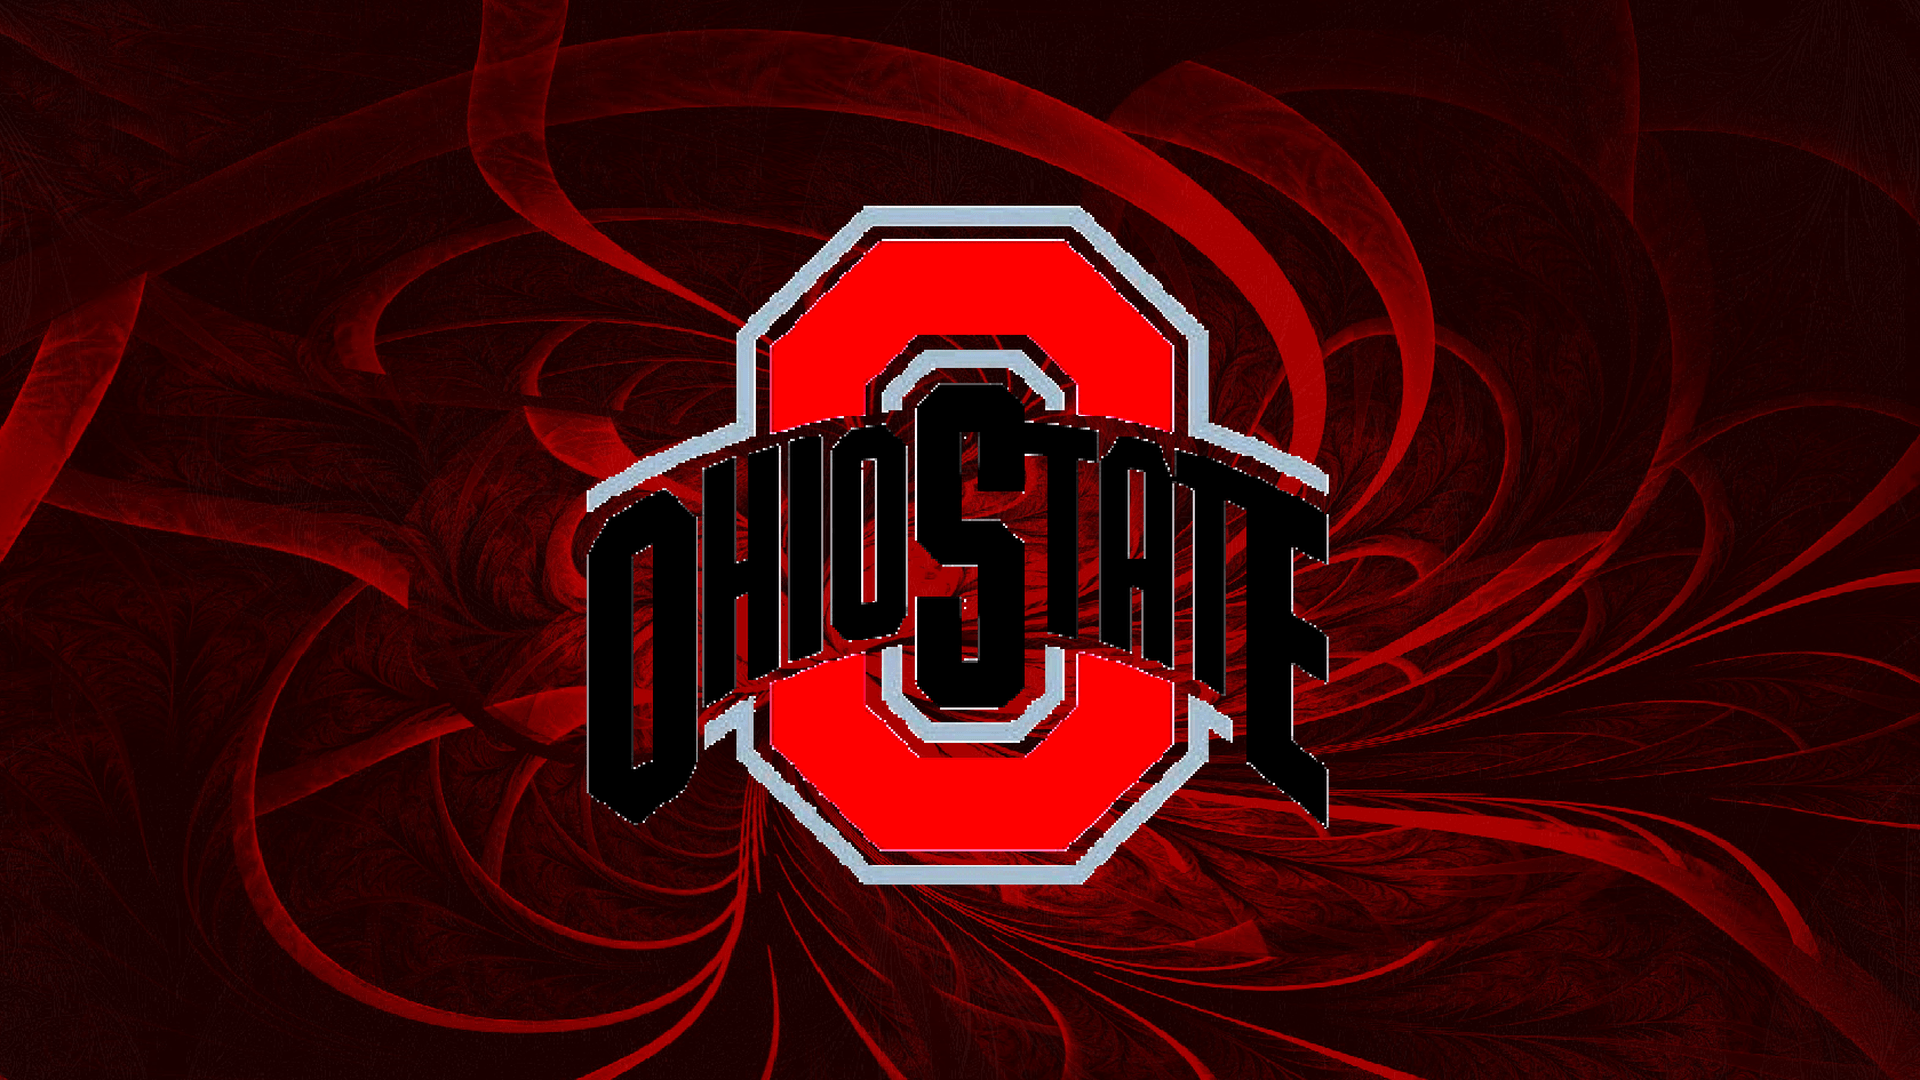 Ohio State Logo - Ohio State Buckeyes image ATHLETIC LOGO HD wallpaper